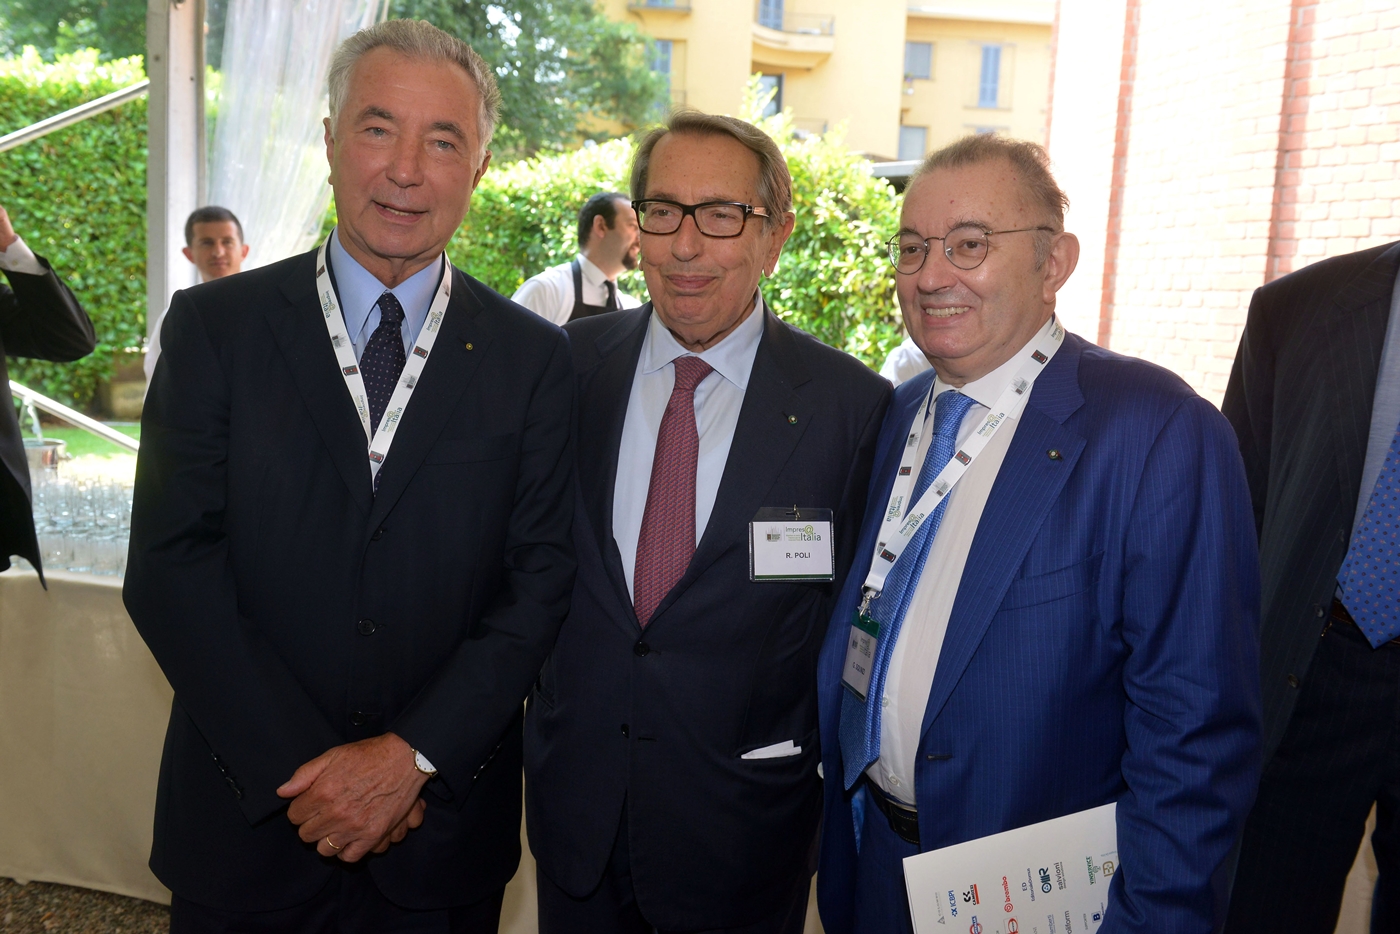 Giannni Zonin, Roberto Poli, Giorgio Squinzi